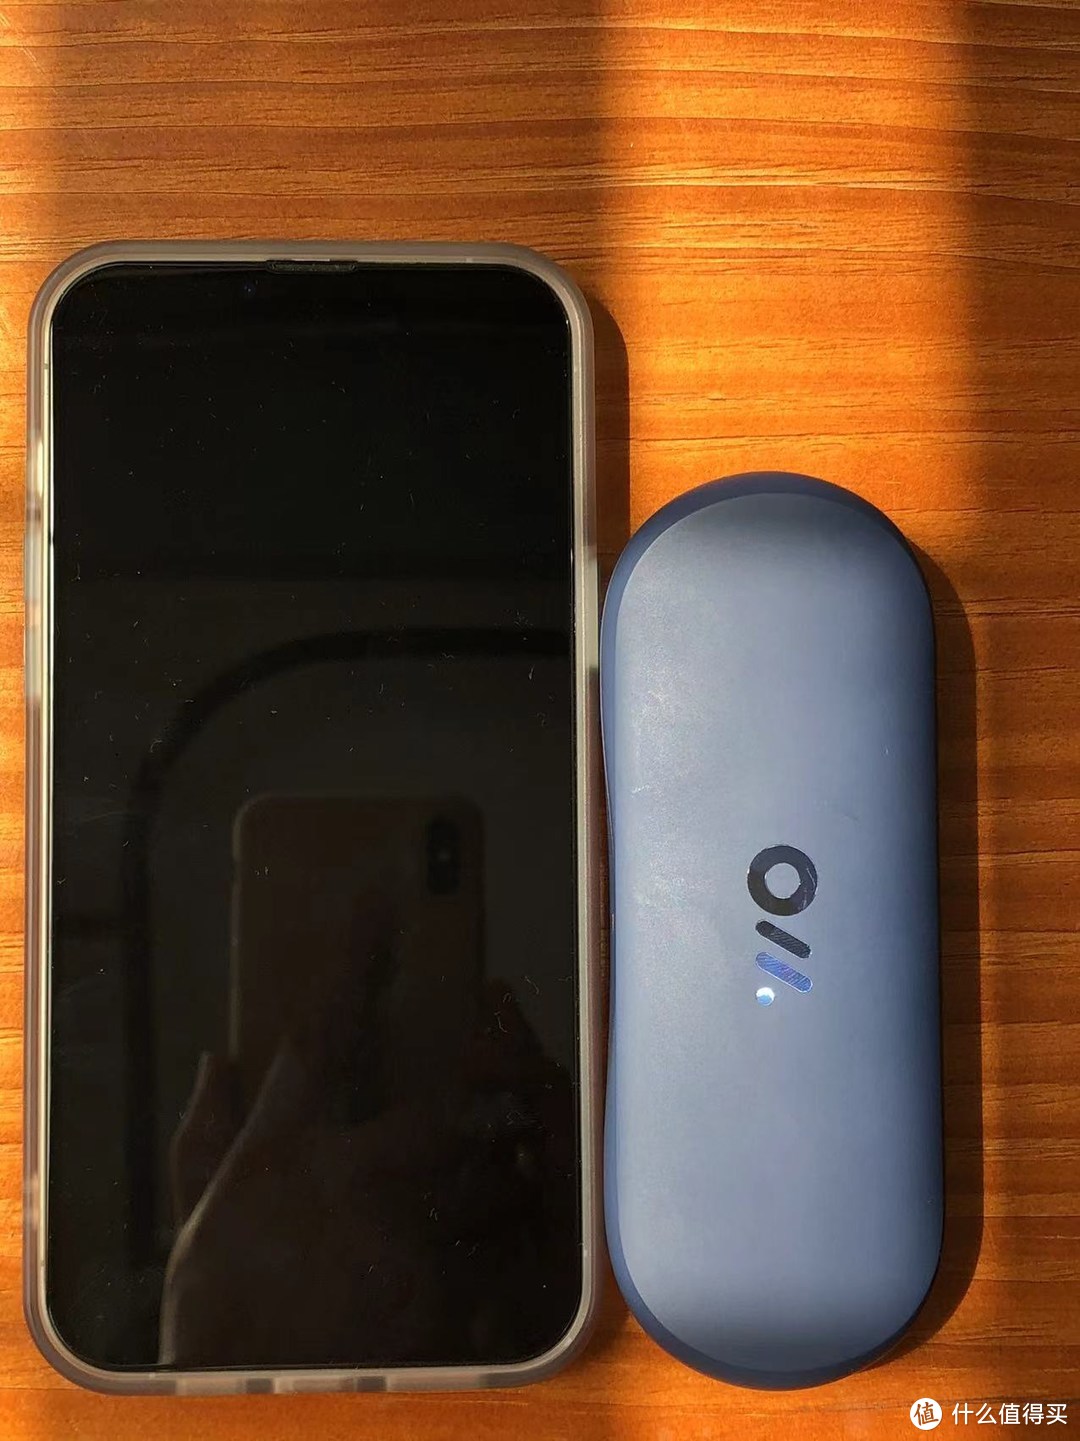 OWS耳机盒长度与iPhone13 pro Max对比，大概相当于三分之二长度。